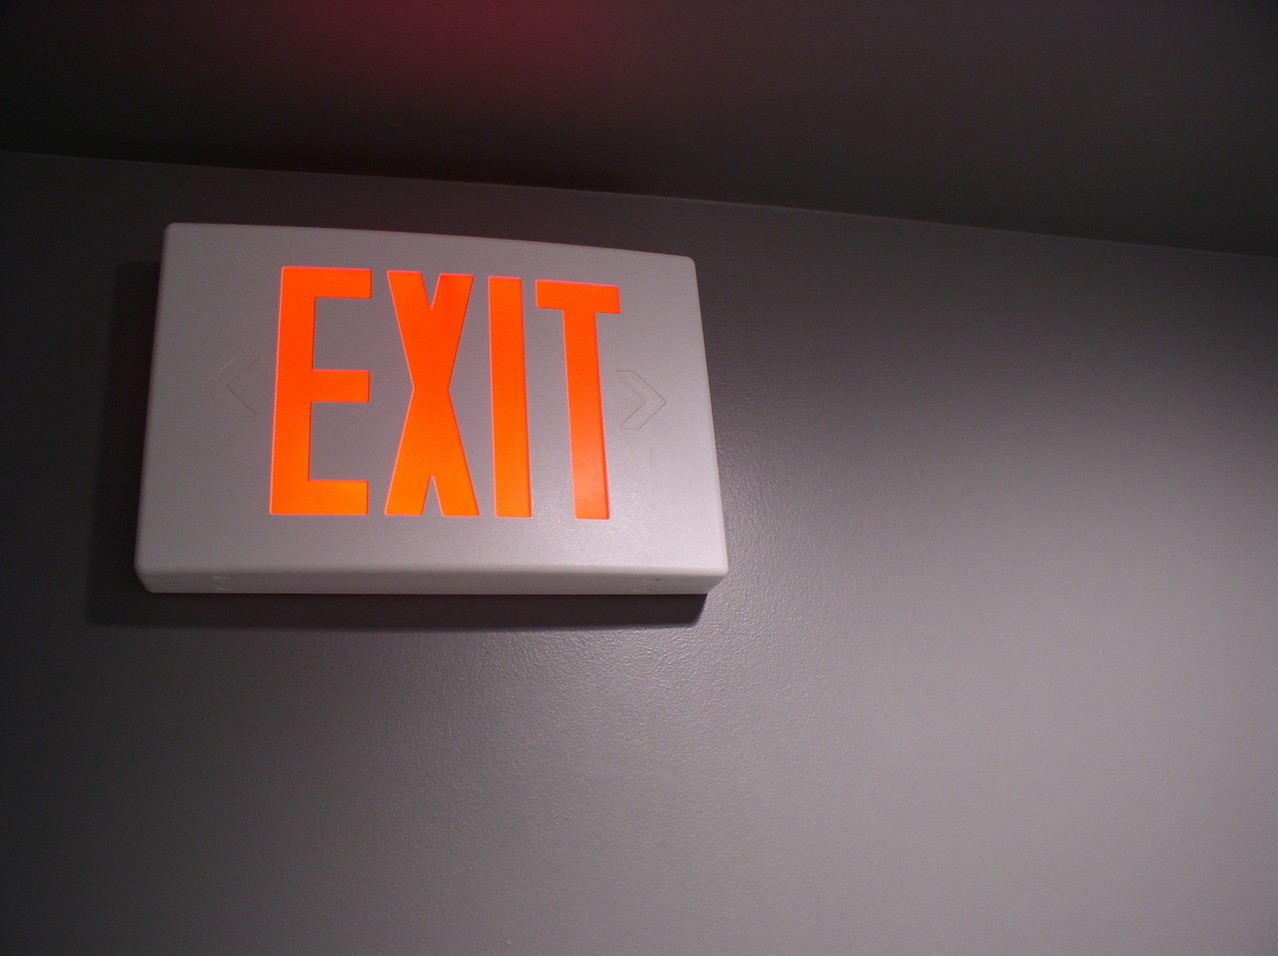 emergency exit lights